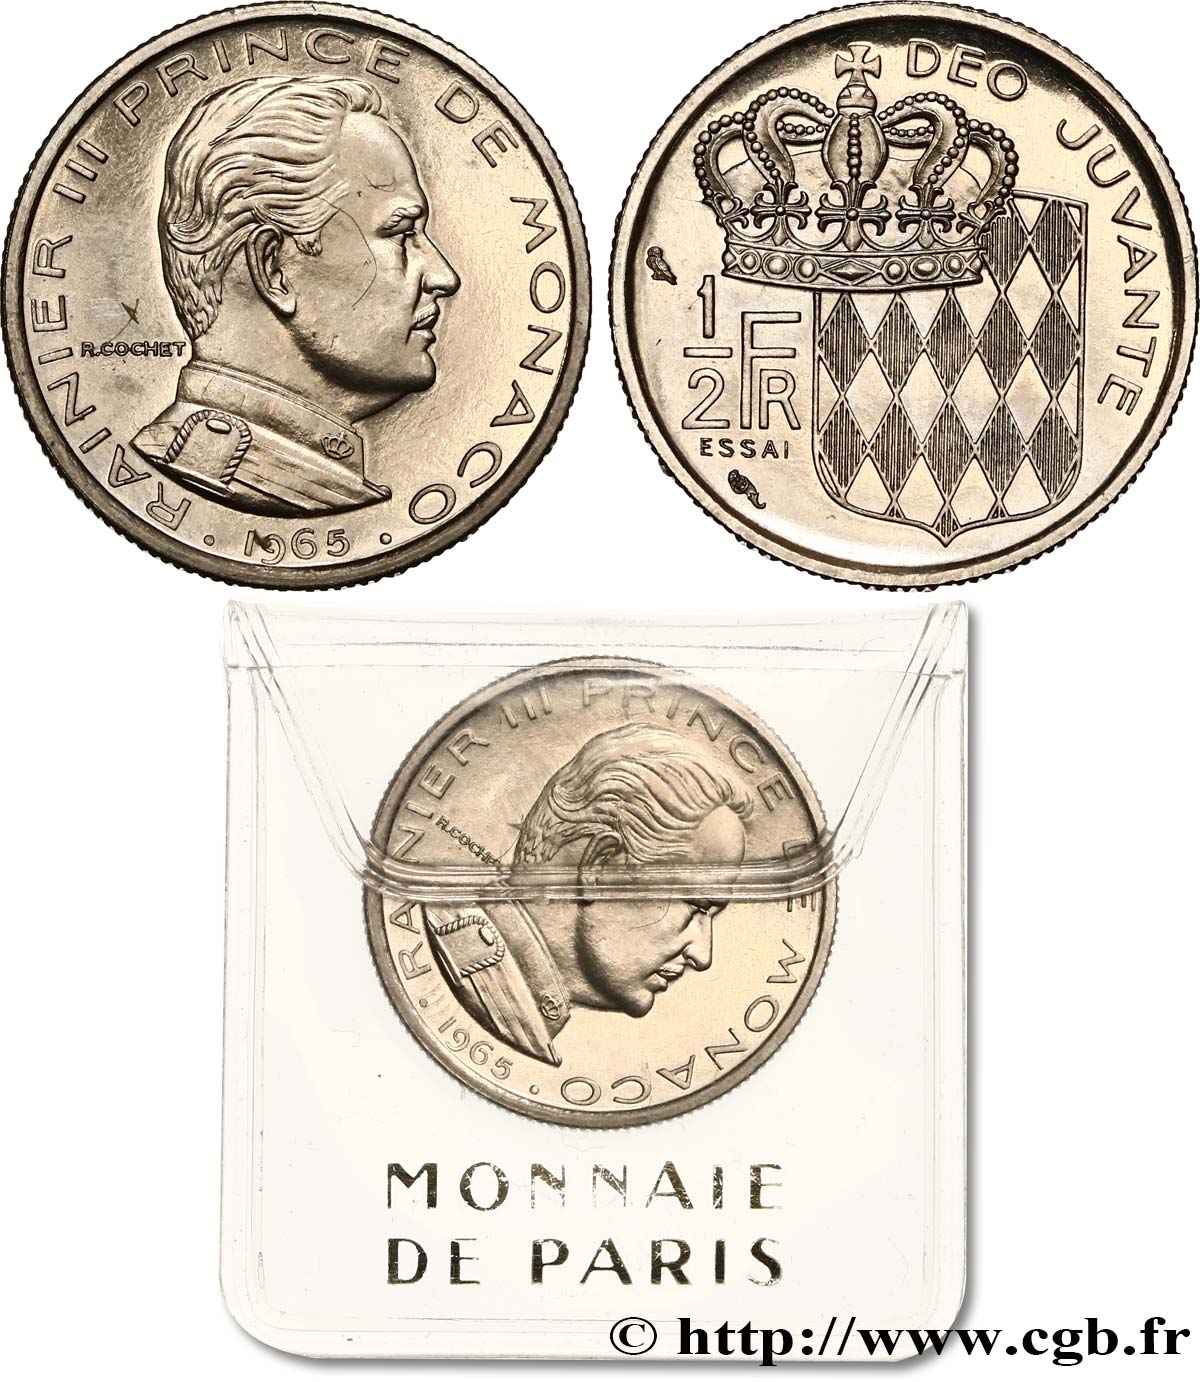 MÓNACO - PRINCIPADO DE MÓNACO - RANIERO III Essai de 1/2 Franc 1965 Paris SC 